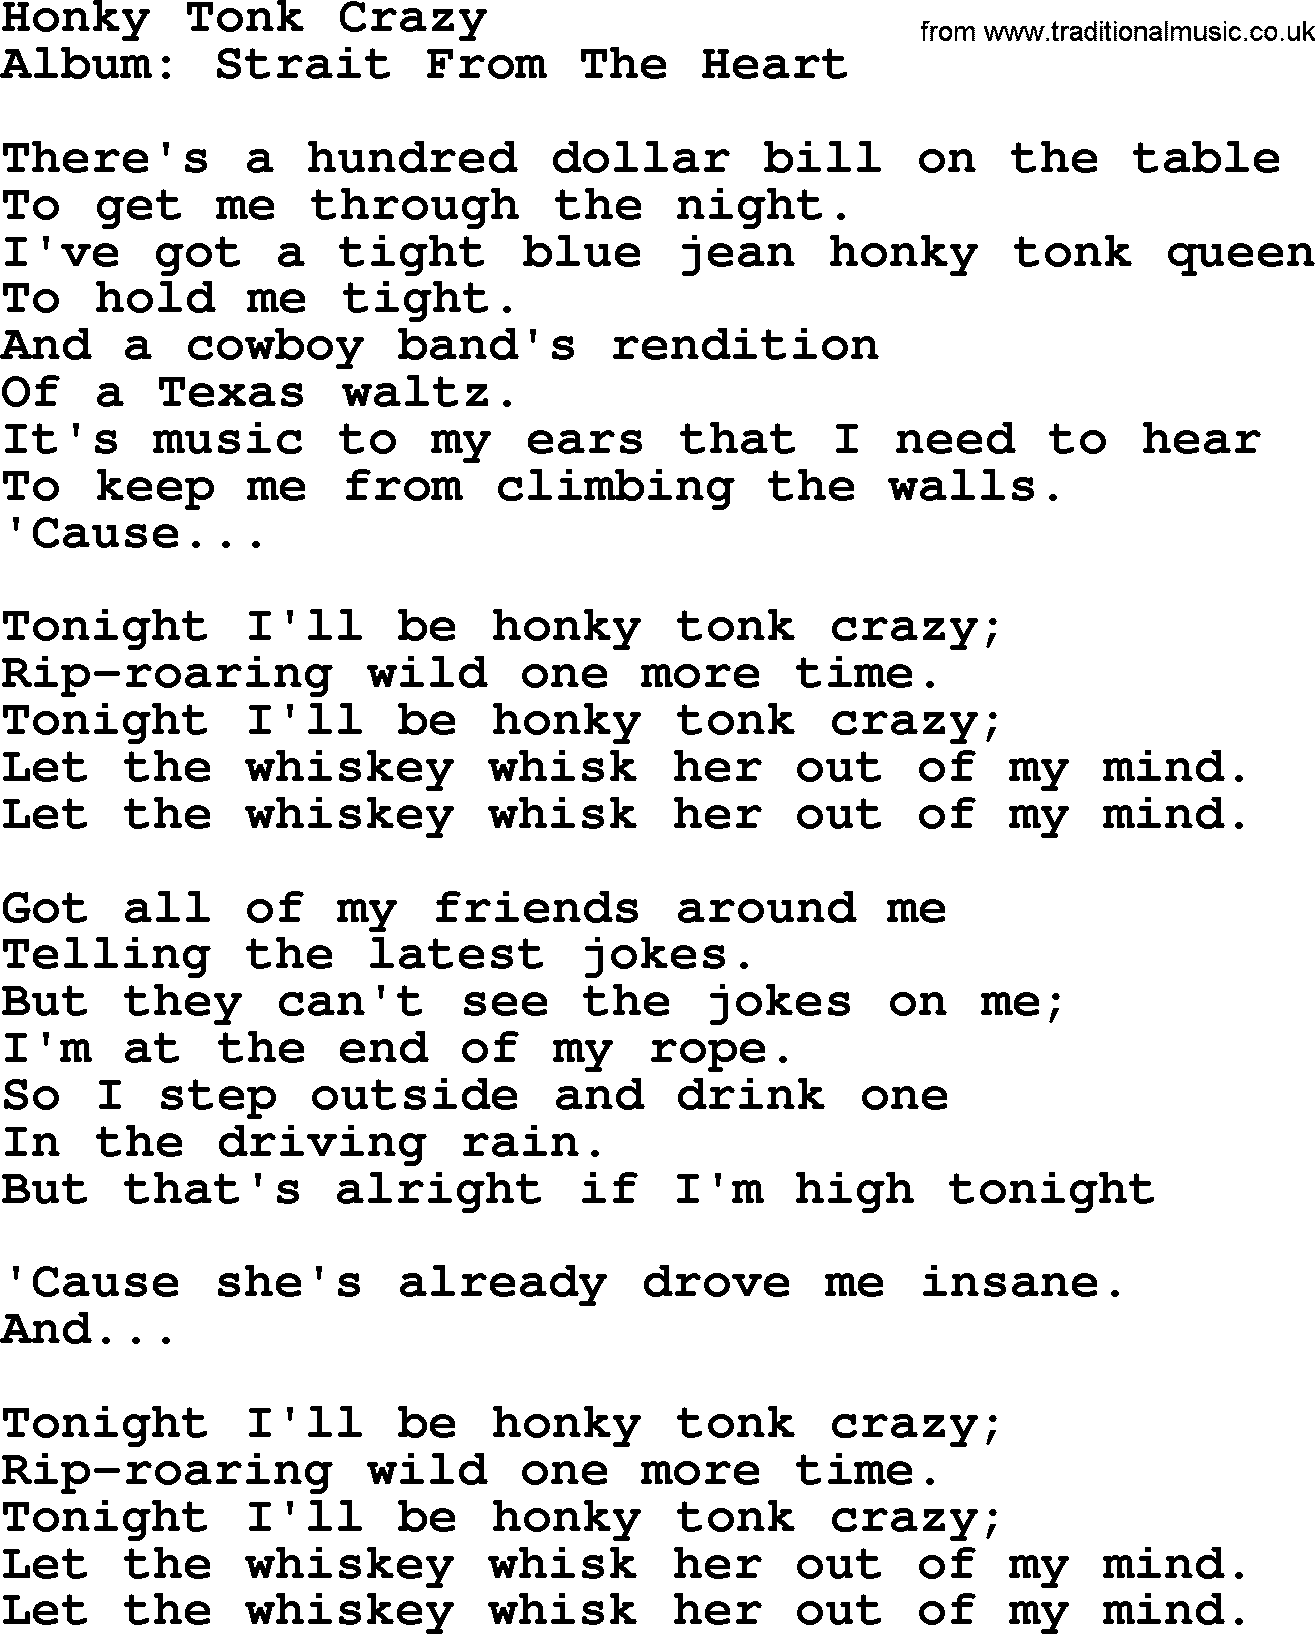 George Strait song: Honky Tonk Crazy, lyrics